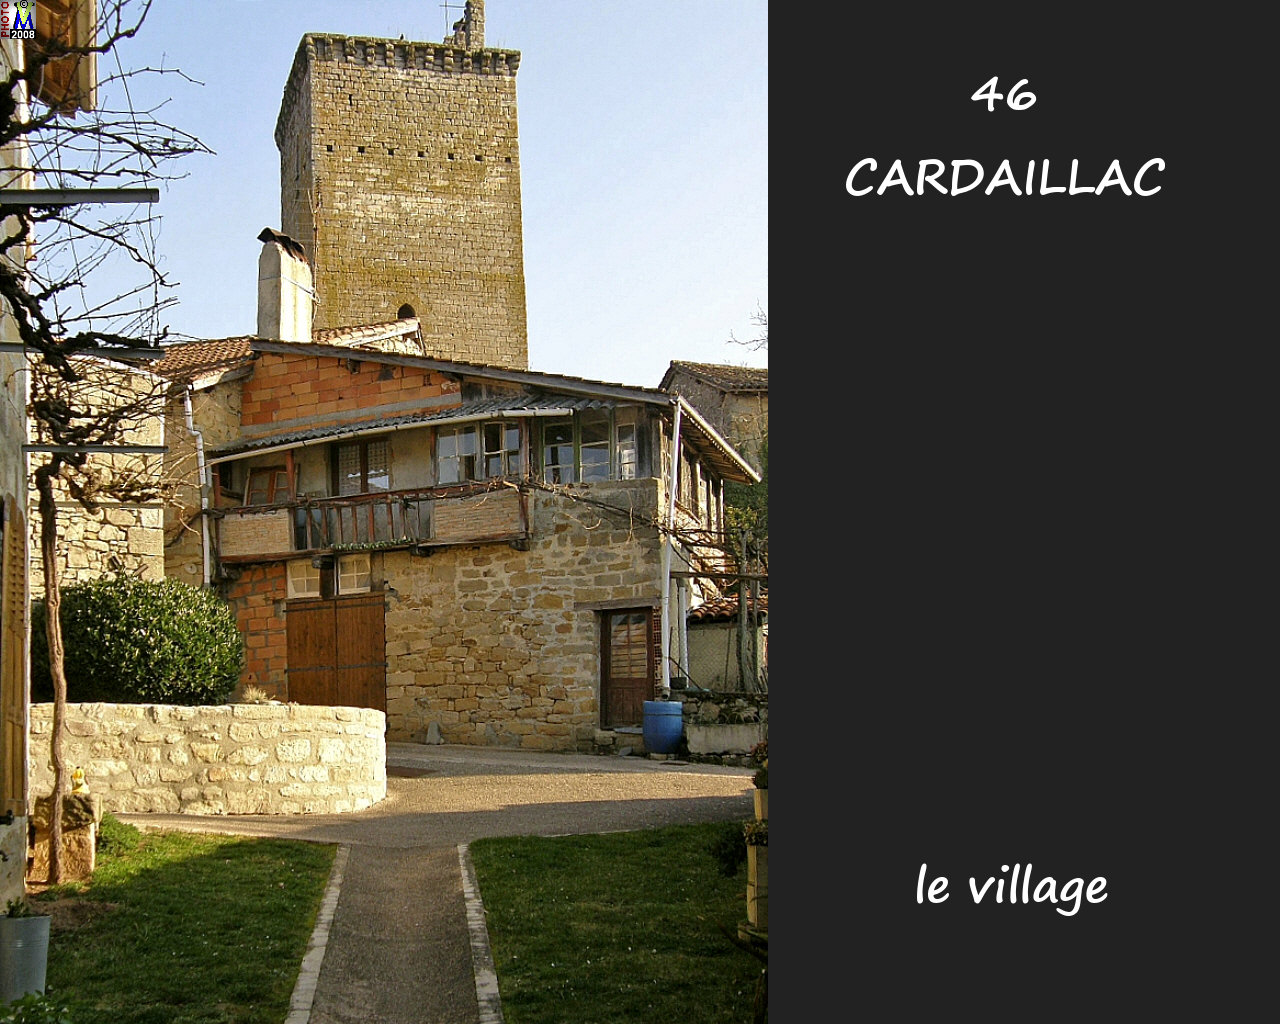 46CARDAILLAC_village_138.jpg